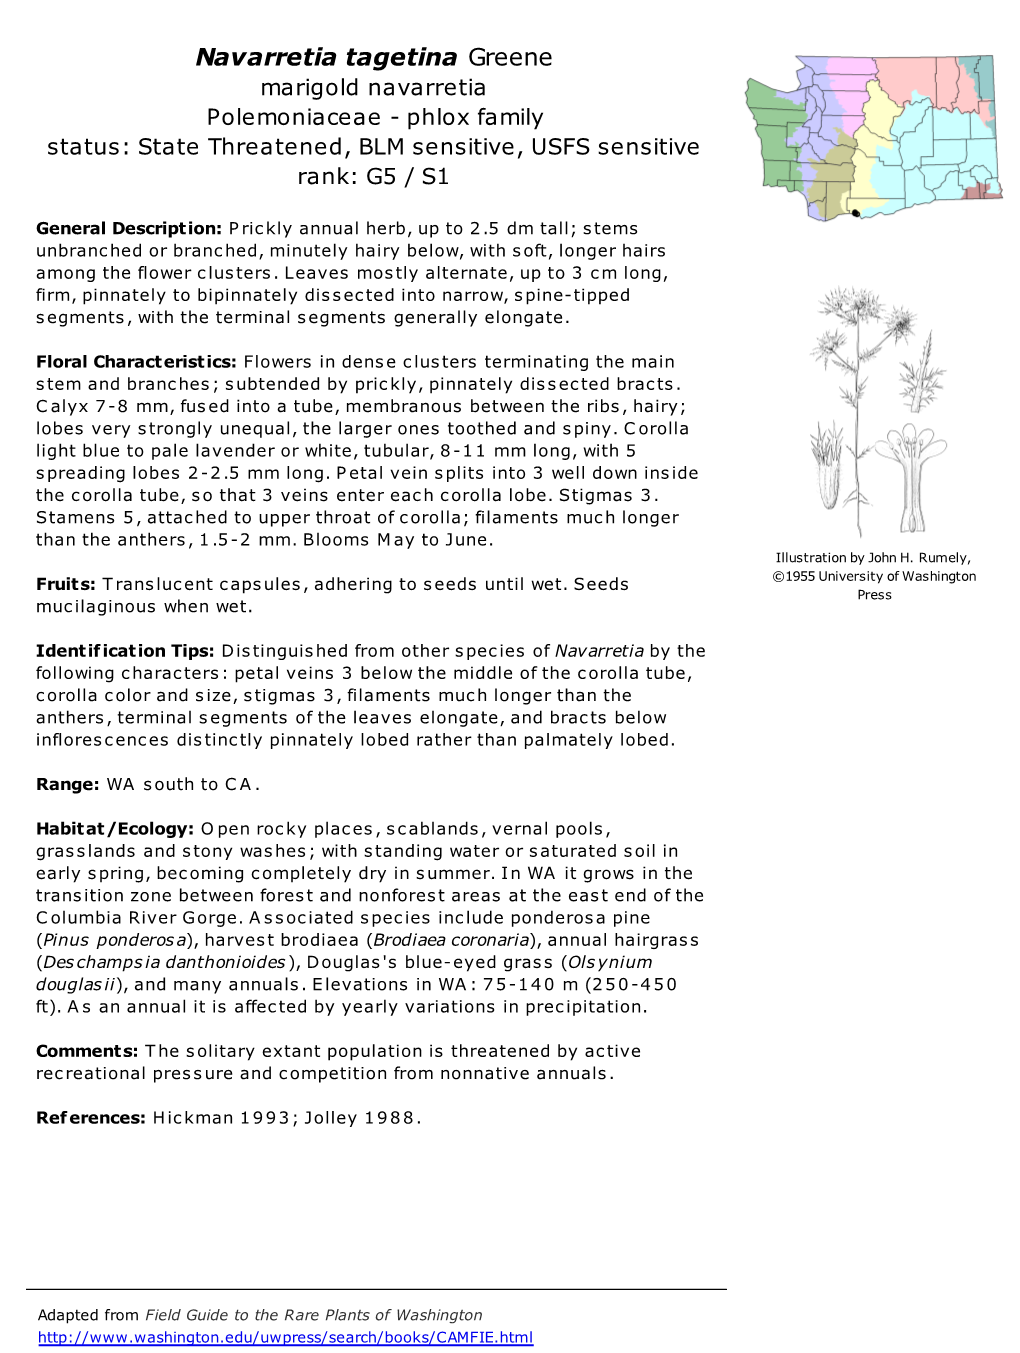 Navarretia Tagetina Greene Marigold Navarretia Polemoniaceae - Phlox Family Status: State Threatened, BLM Sensitive, USFS Sensitive Rank: G5 / S1